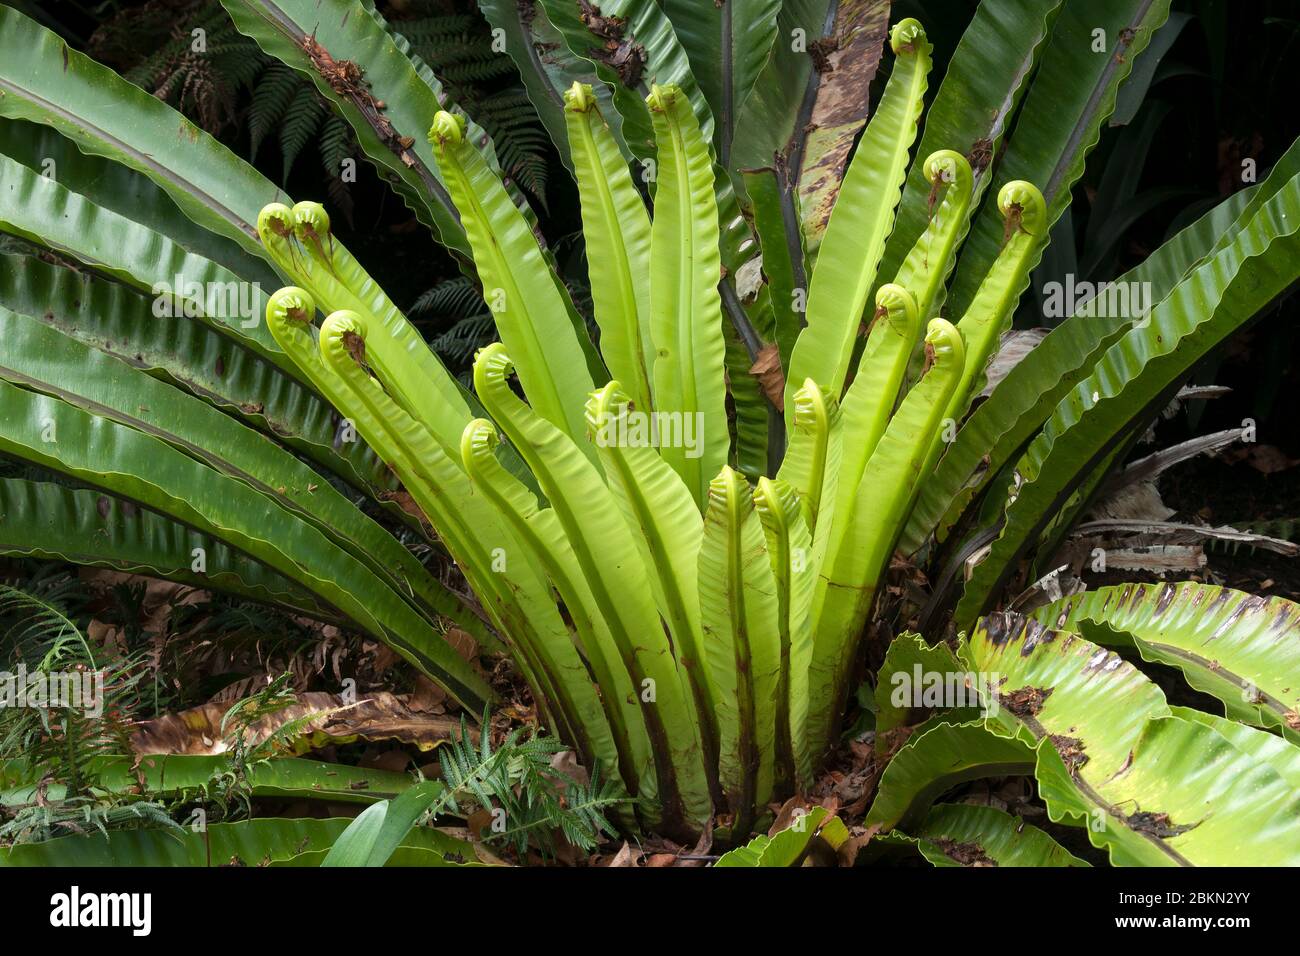 Sydney Australia, new growth of a asplenium australasicum or bird's nest fern in sunlight Stock Photo